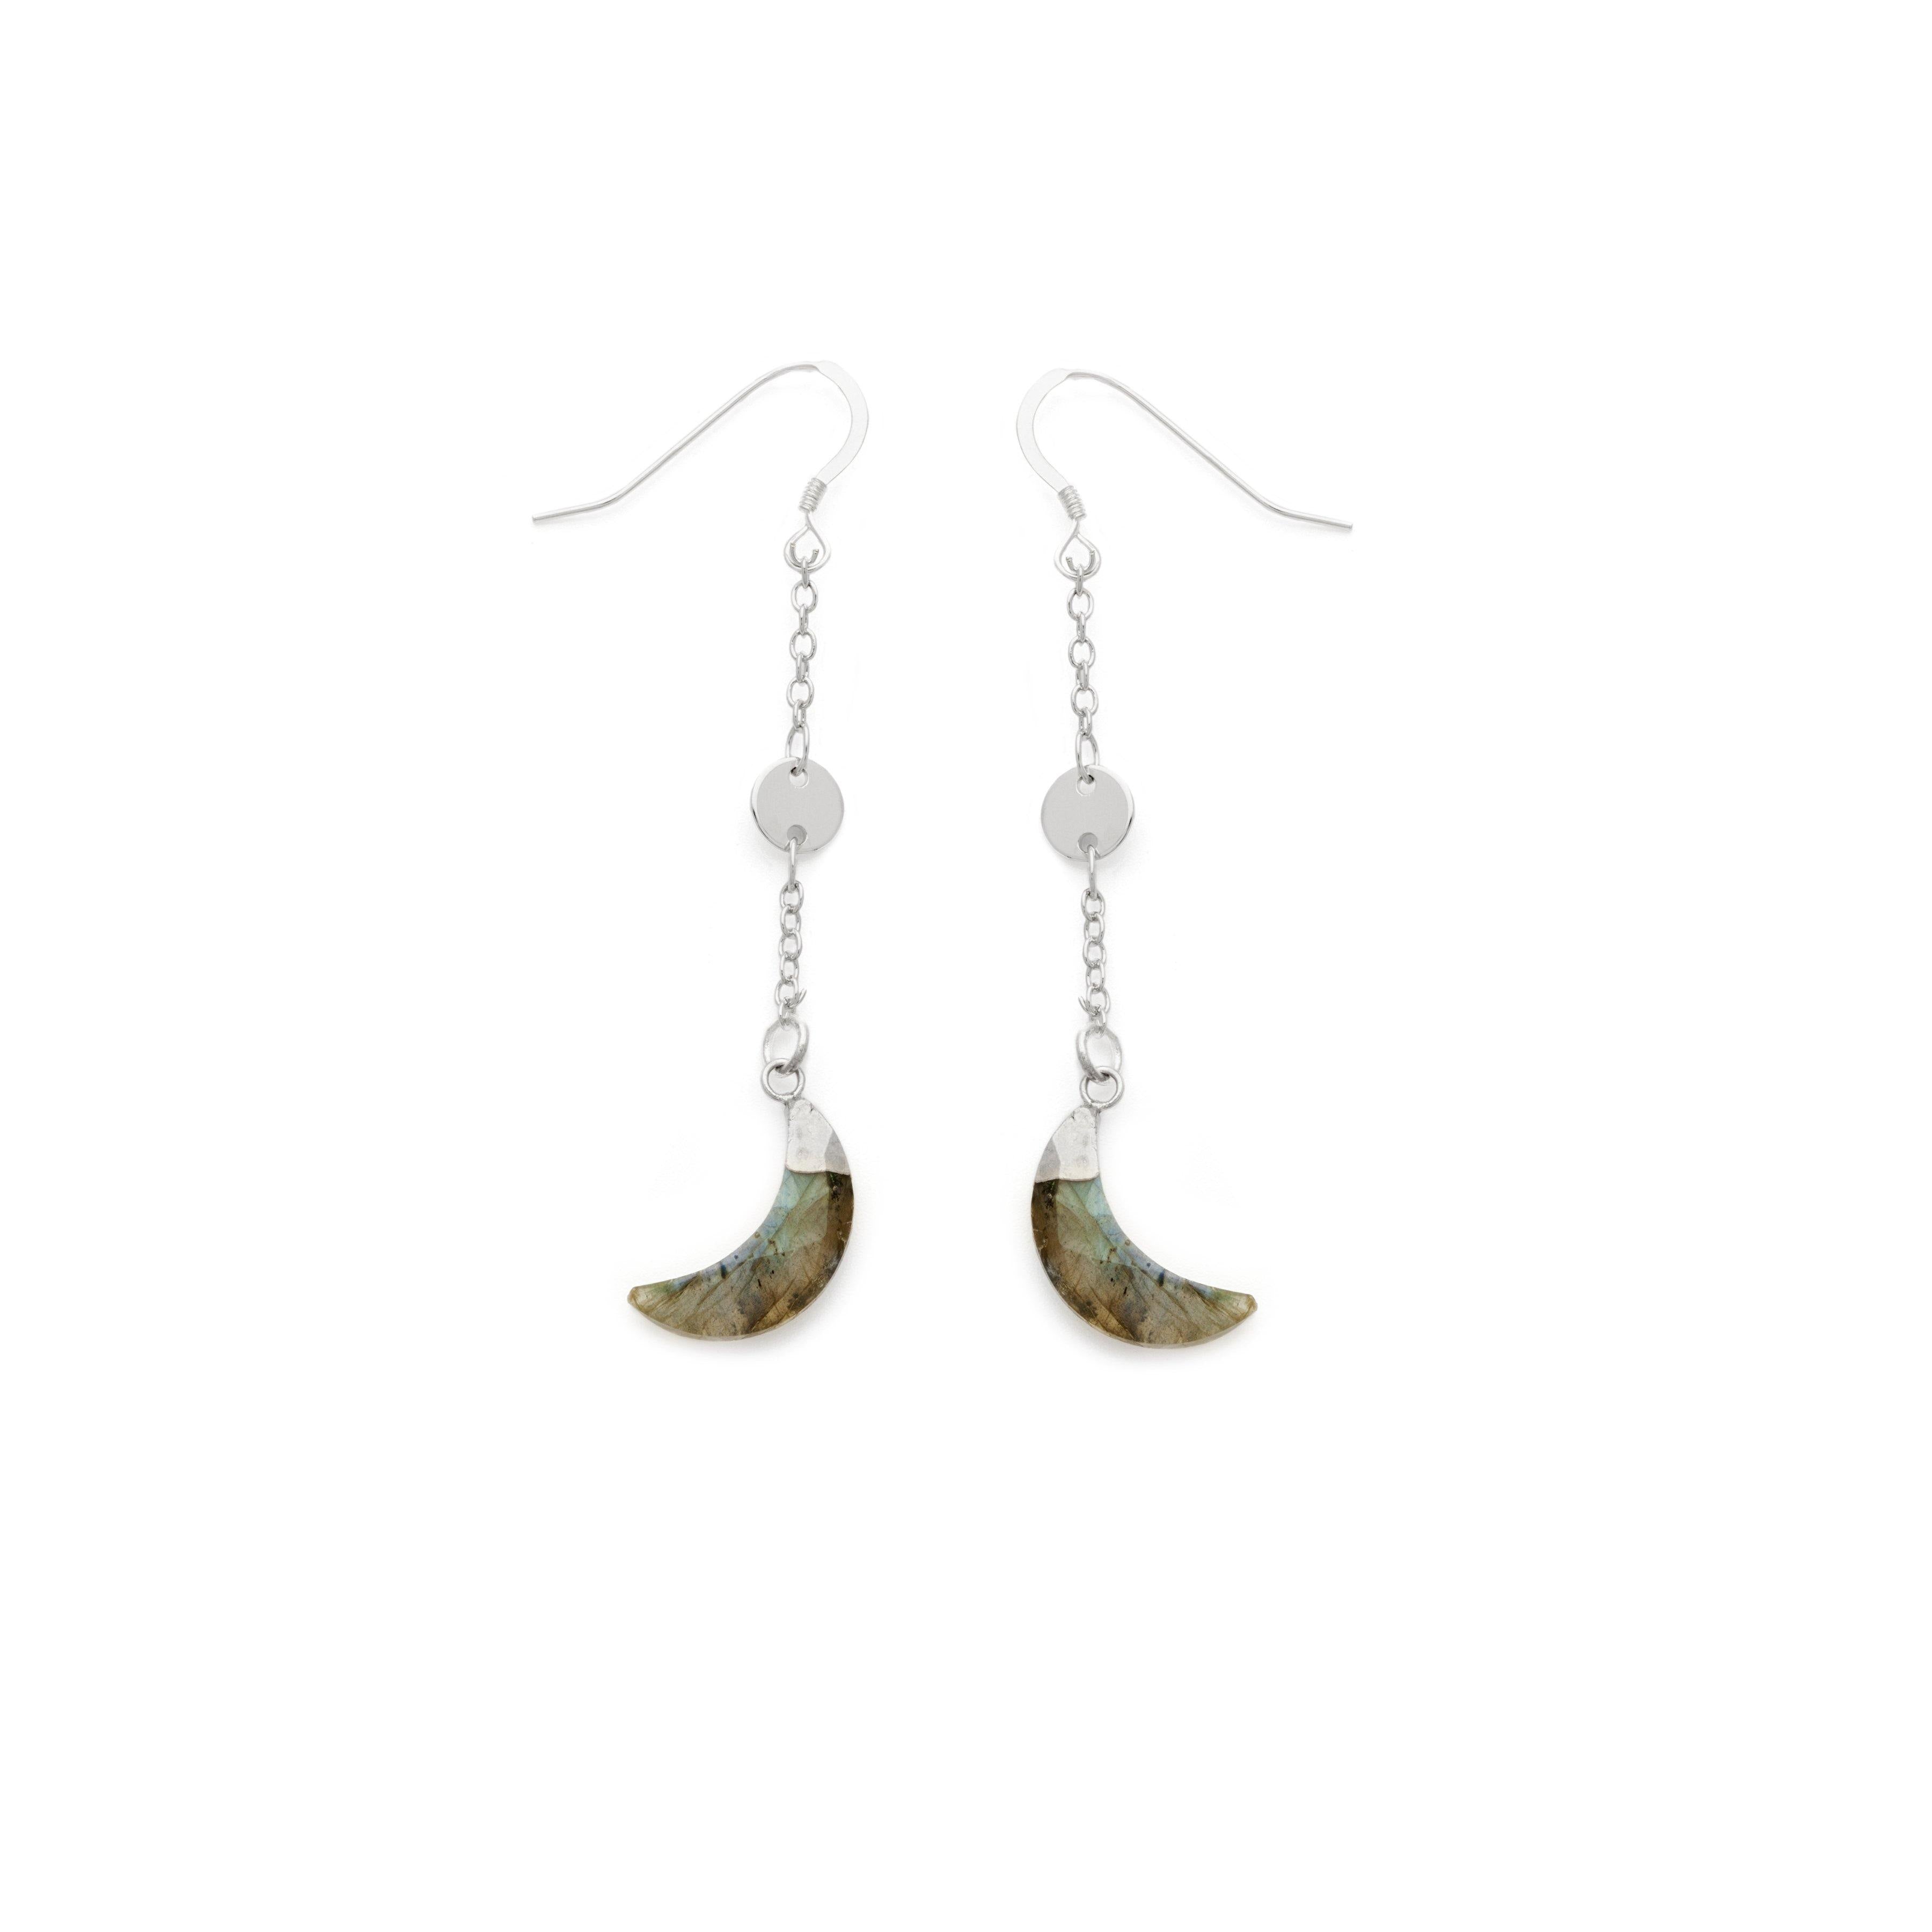 Labradorite Half Moon Earrings - Irit Sorokin Designs Jewelry